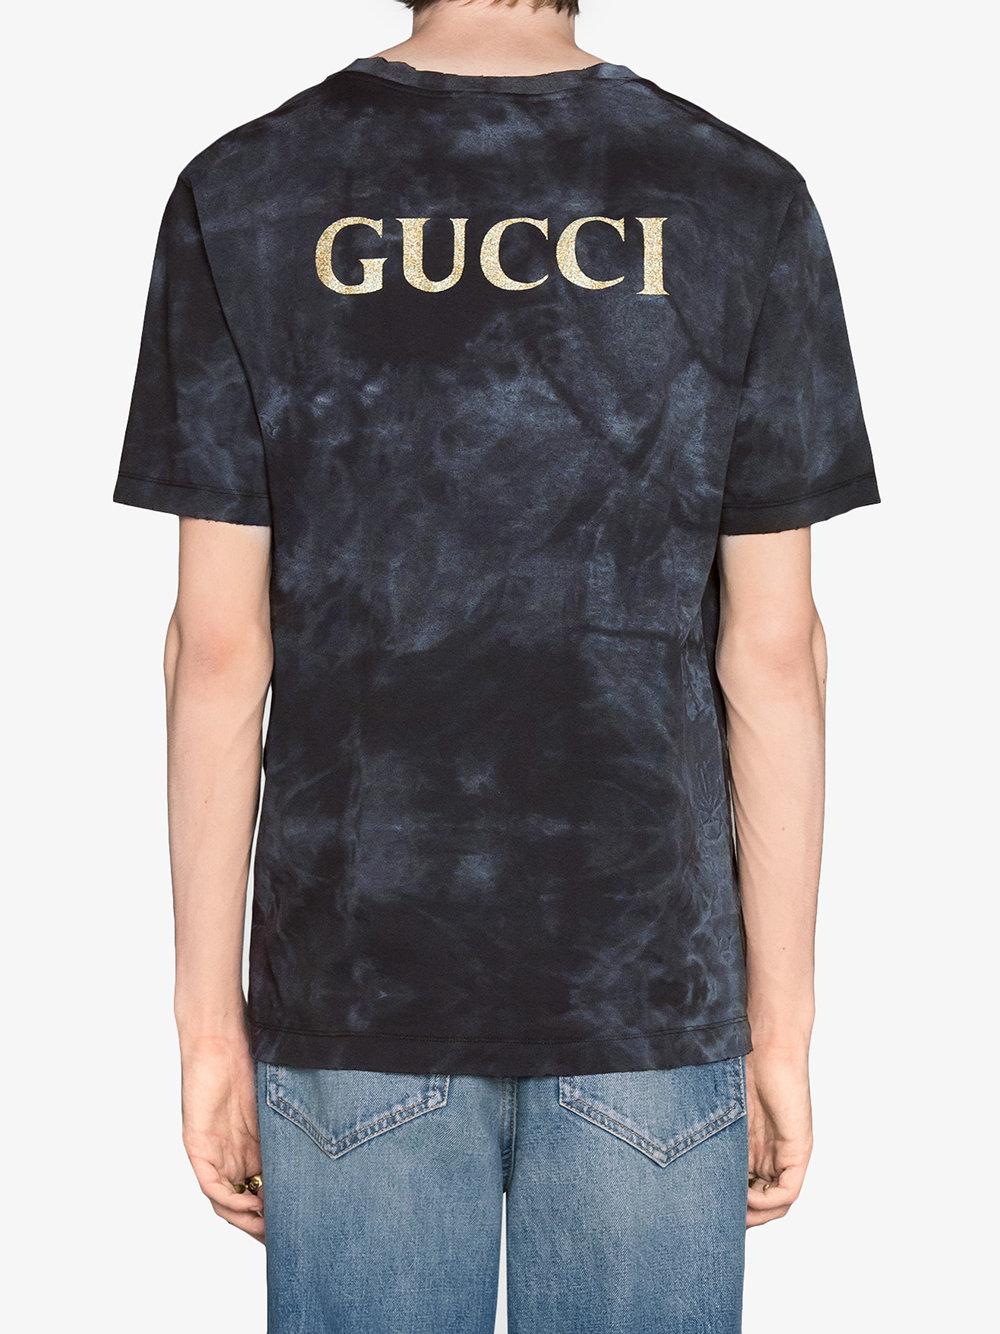 Gucci Cotton Ac/dc Print Tie-dye T-shirt in Black for Men | Lyst